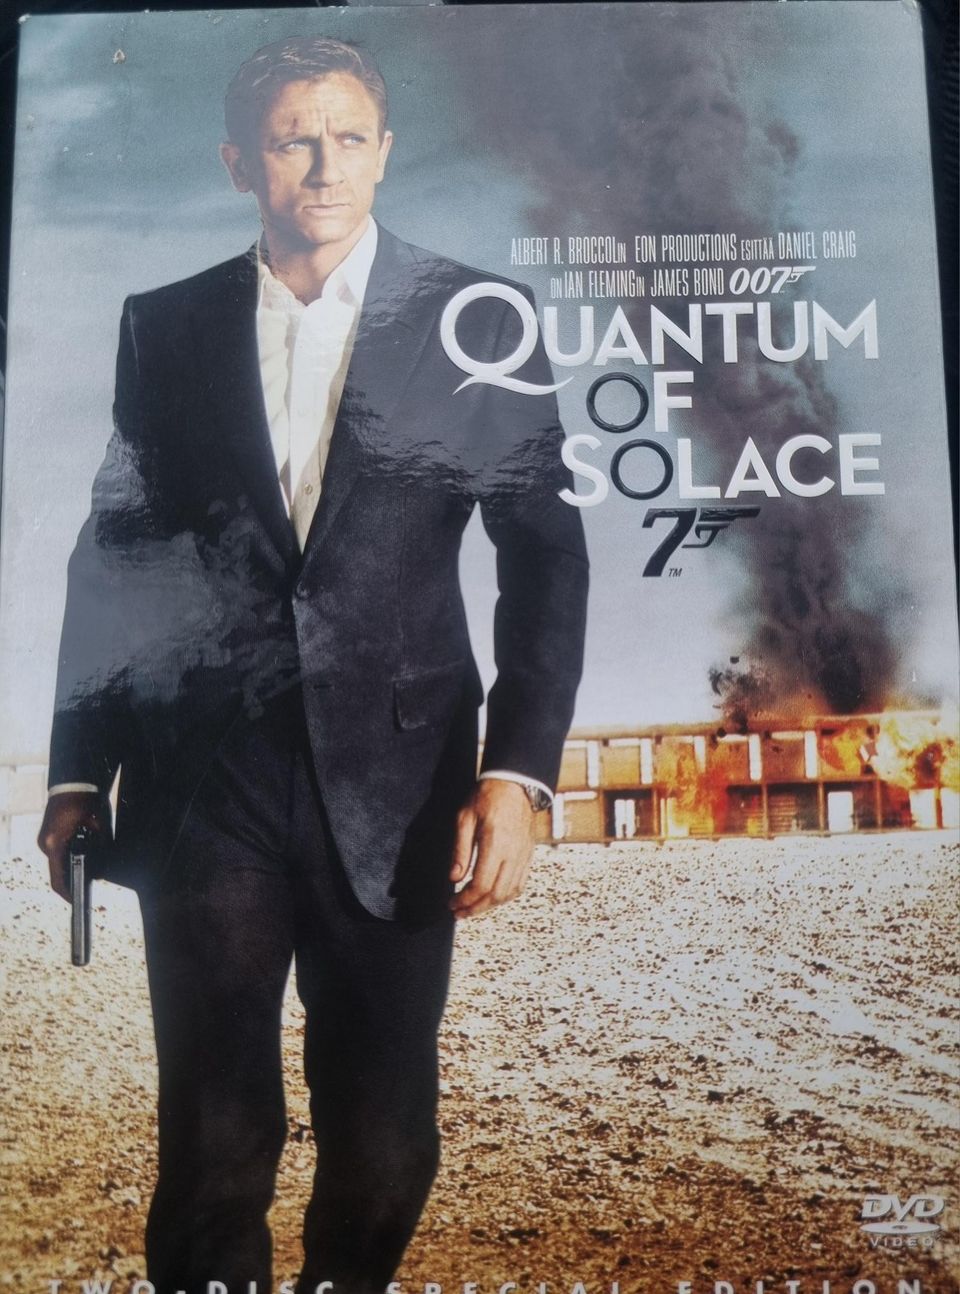 James bond/Quantum of solace tupla Dvd